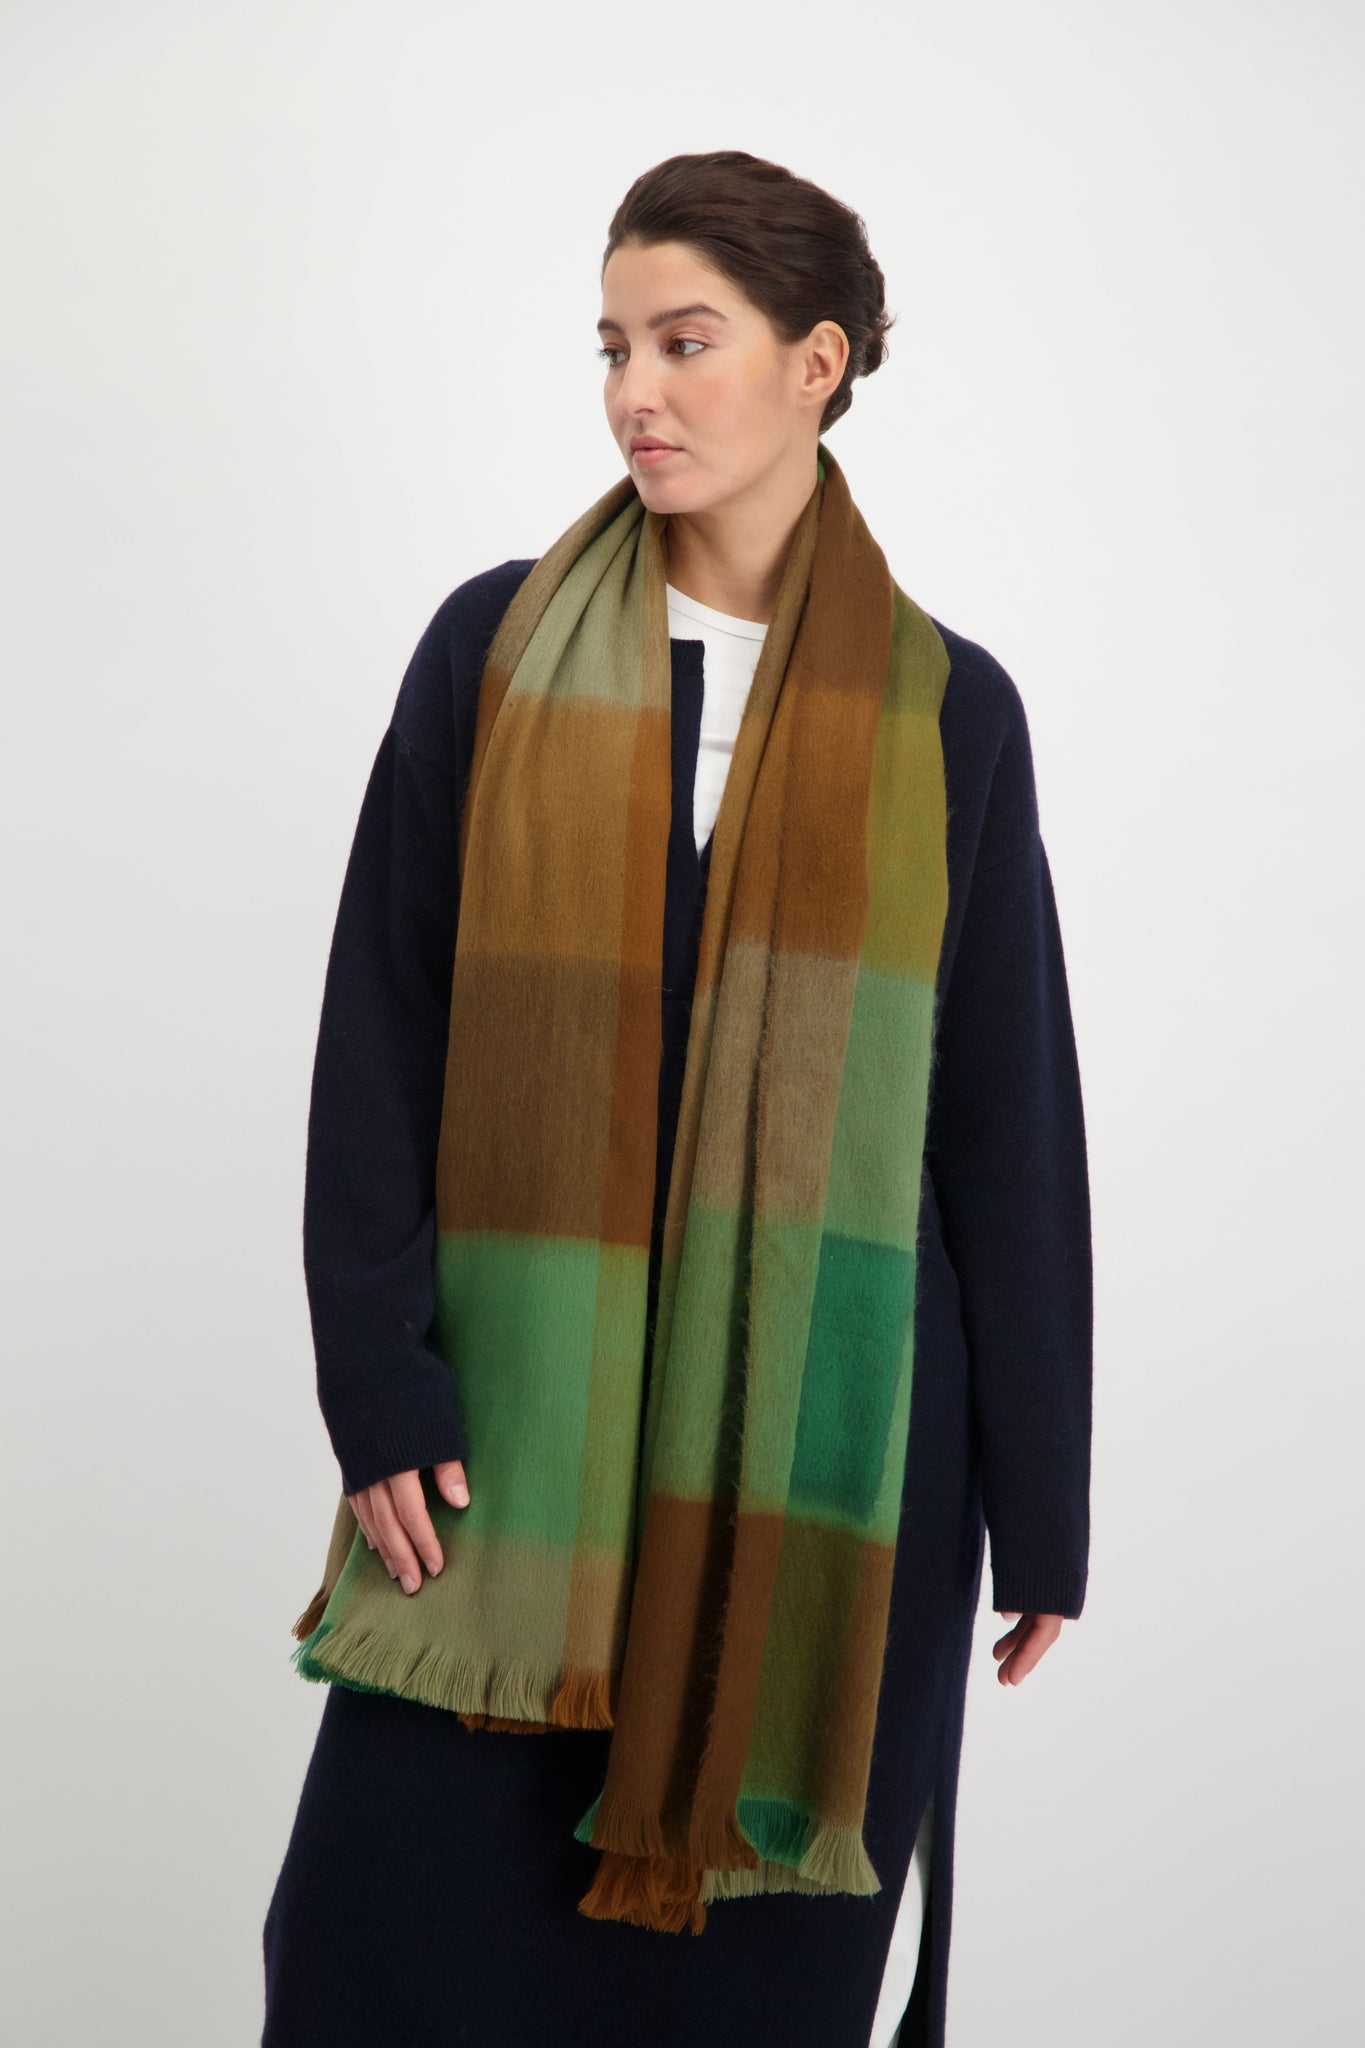 scarf Blocked Green/ Brown/Naturals